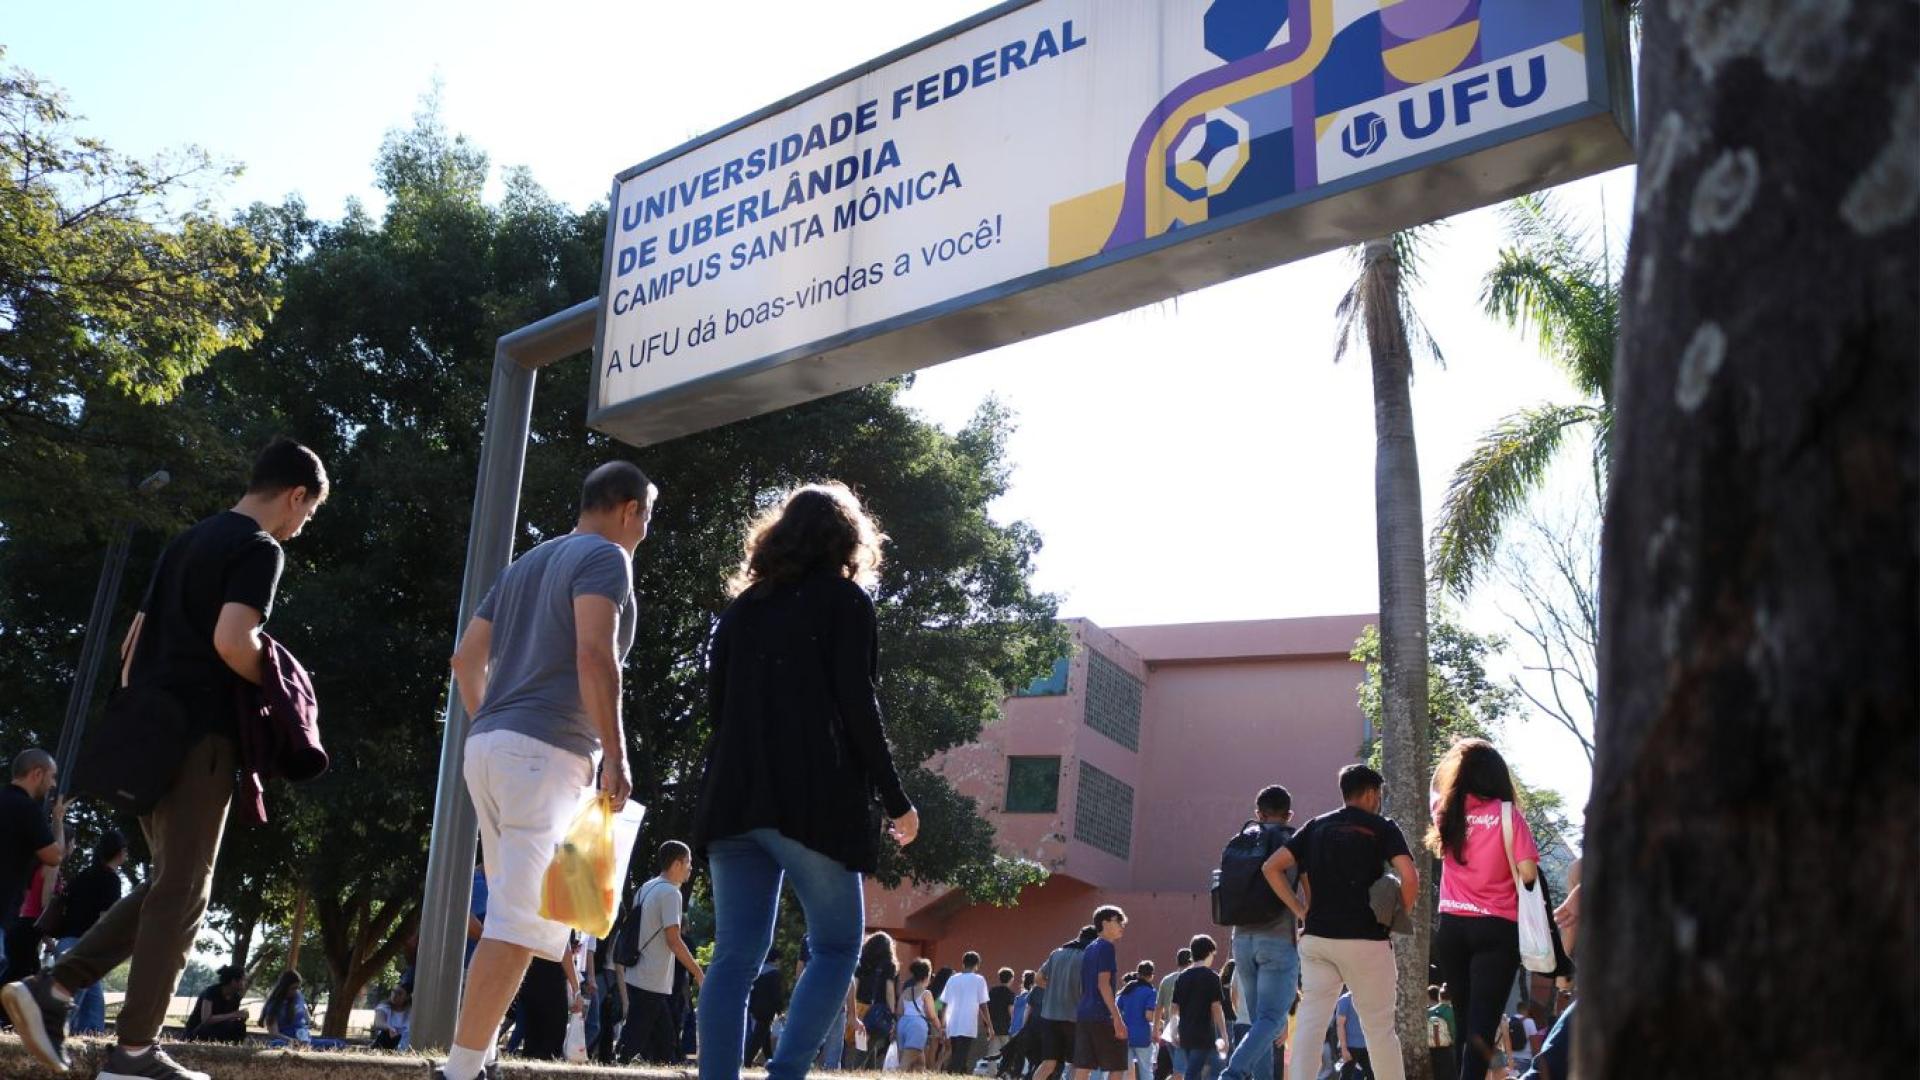 Foto de arquivo: vestibulandos entrando no Campus Santa Mônica